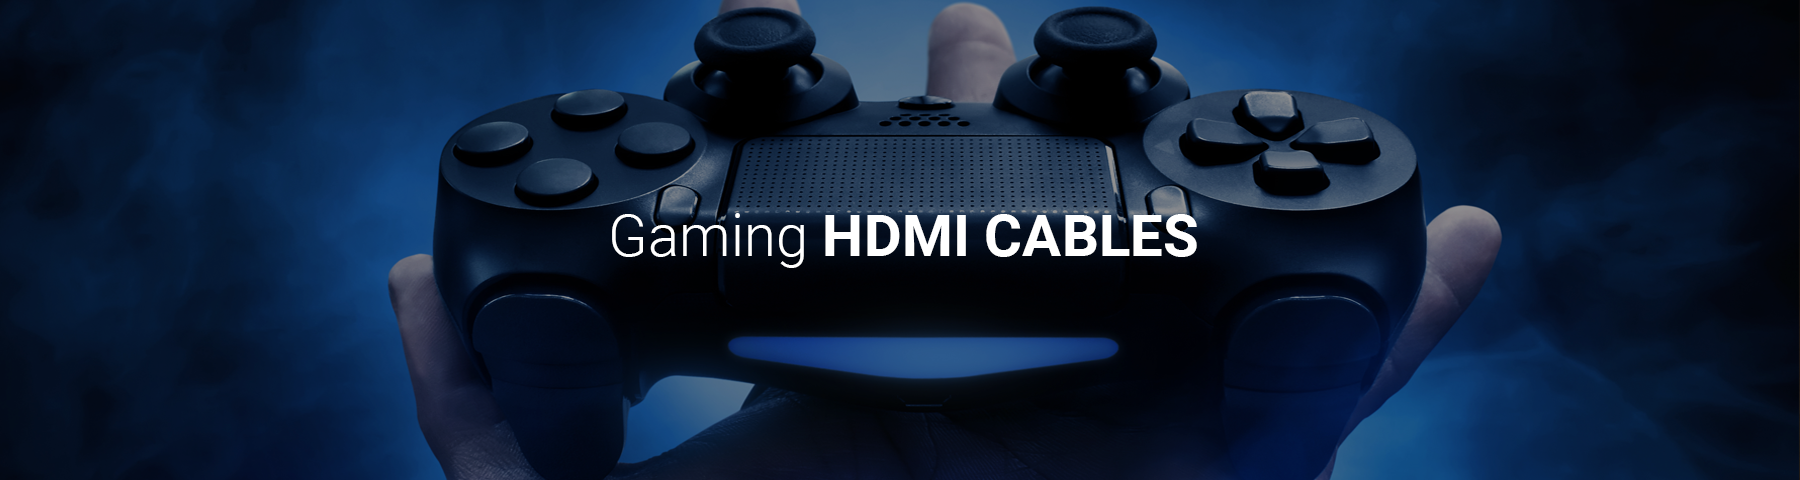 Gaming HDMI Cables